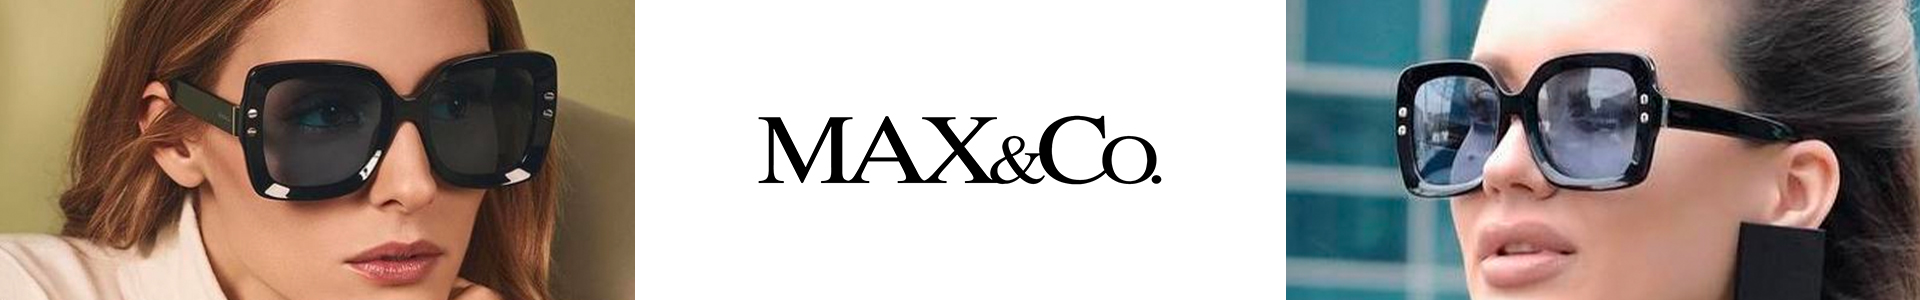 max-co.jpg (202 KB)